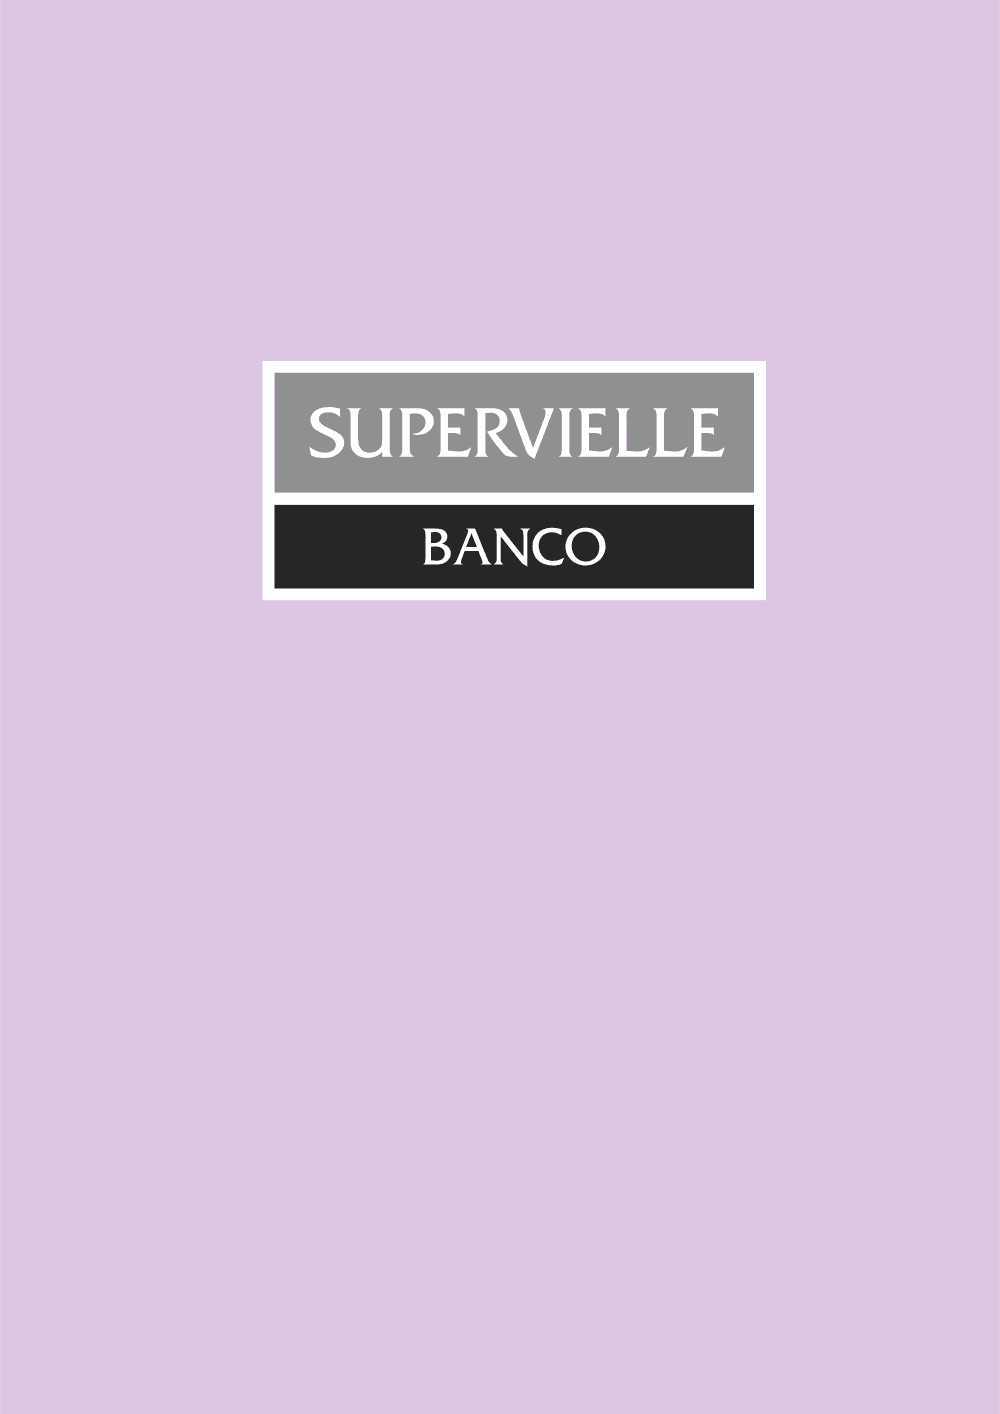 Banco Supervielle Logo download